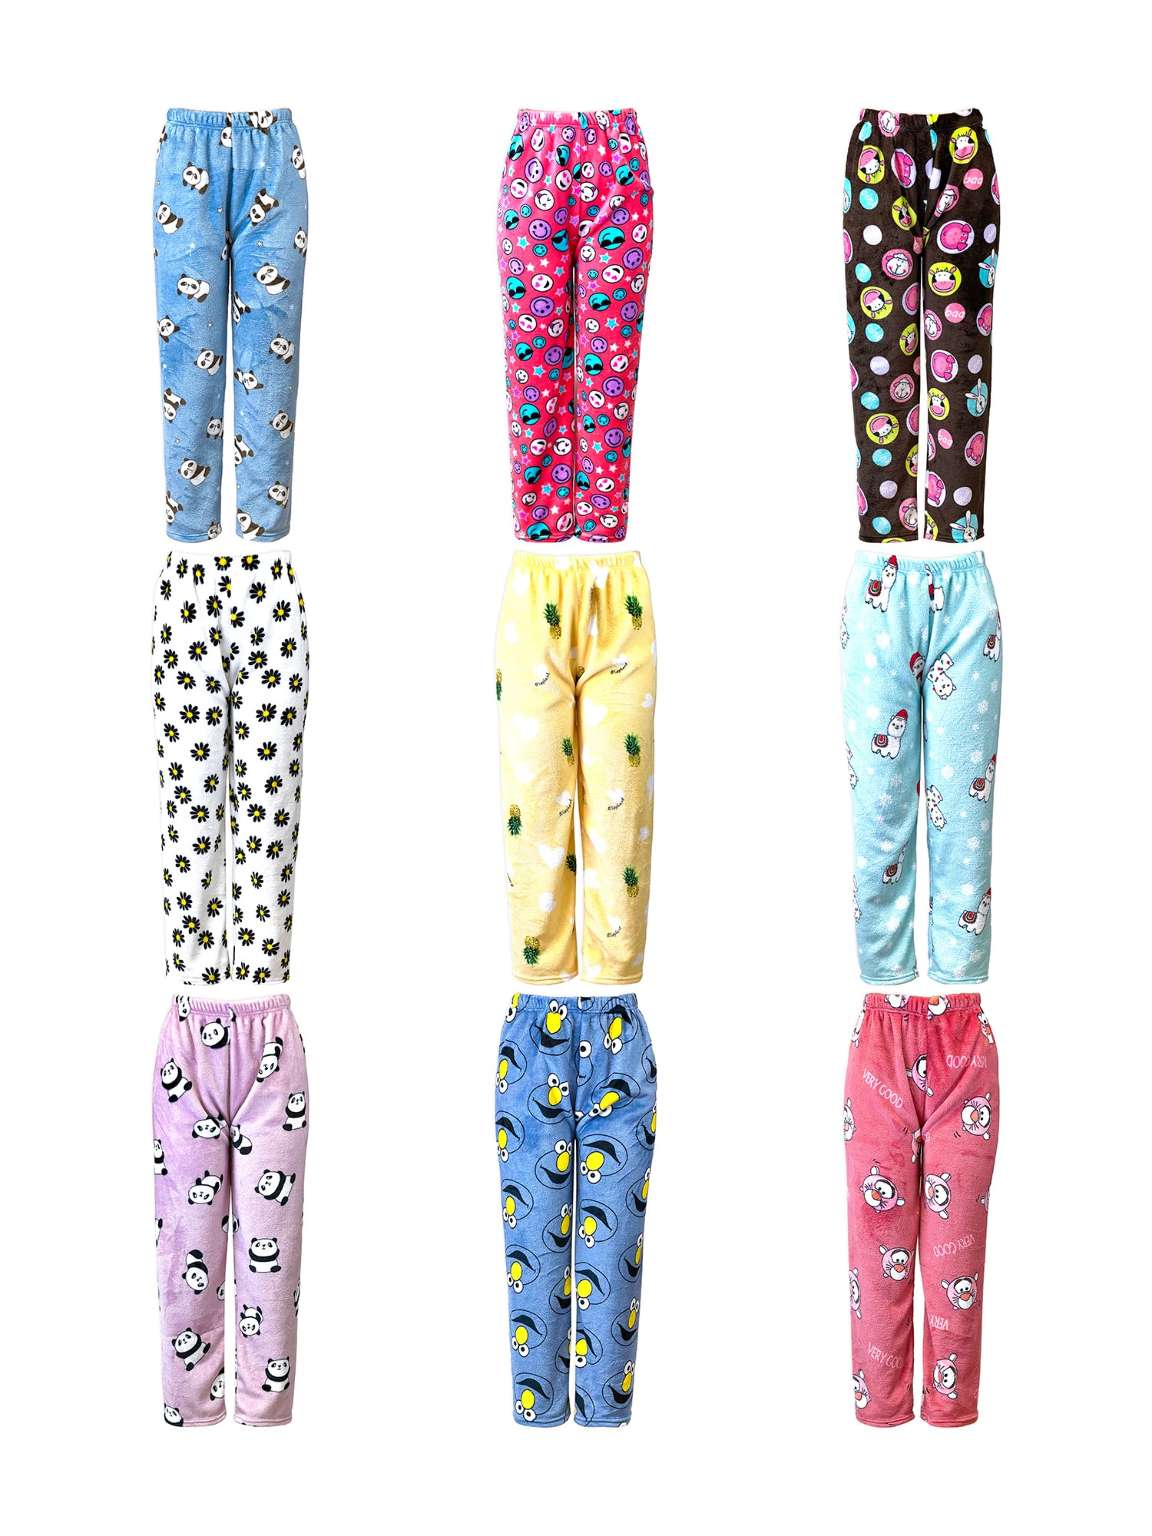 Comfortable wholesale fleece pajama pants In Various Designs